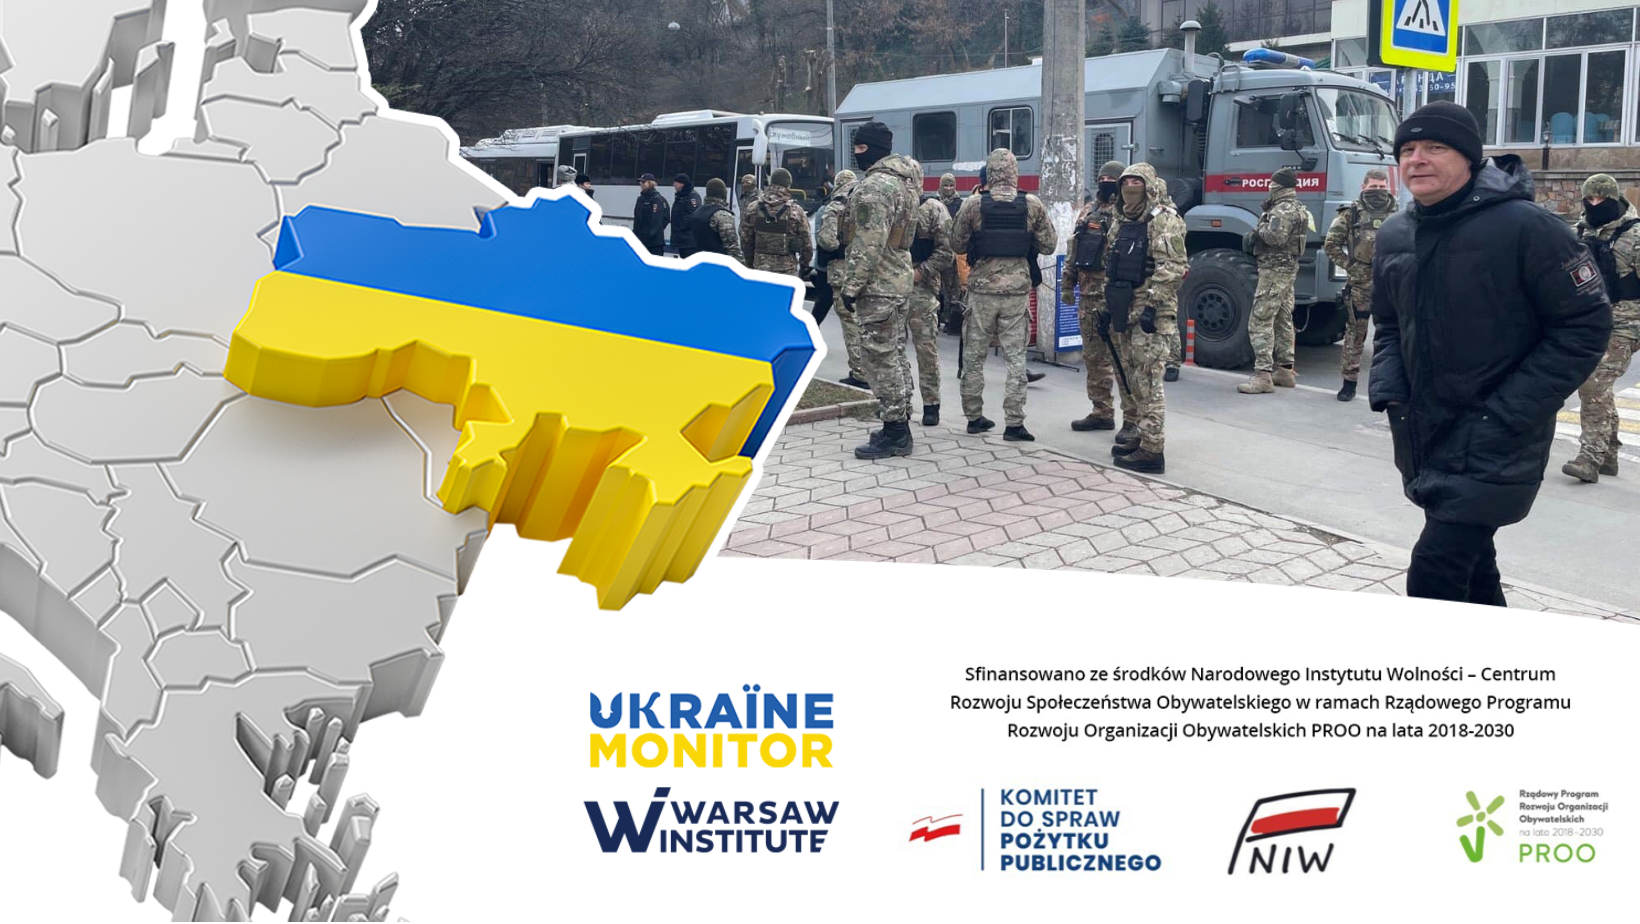 Russian Crackdown on Crimean Tatars